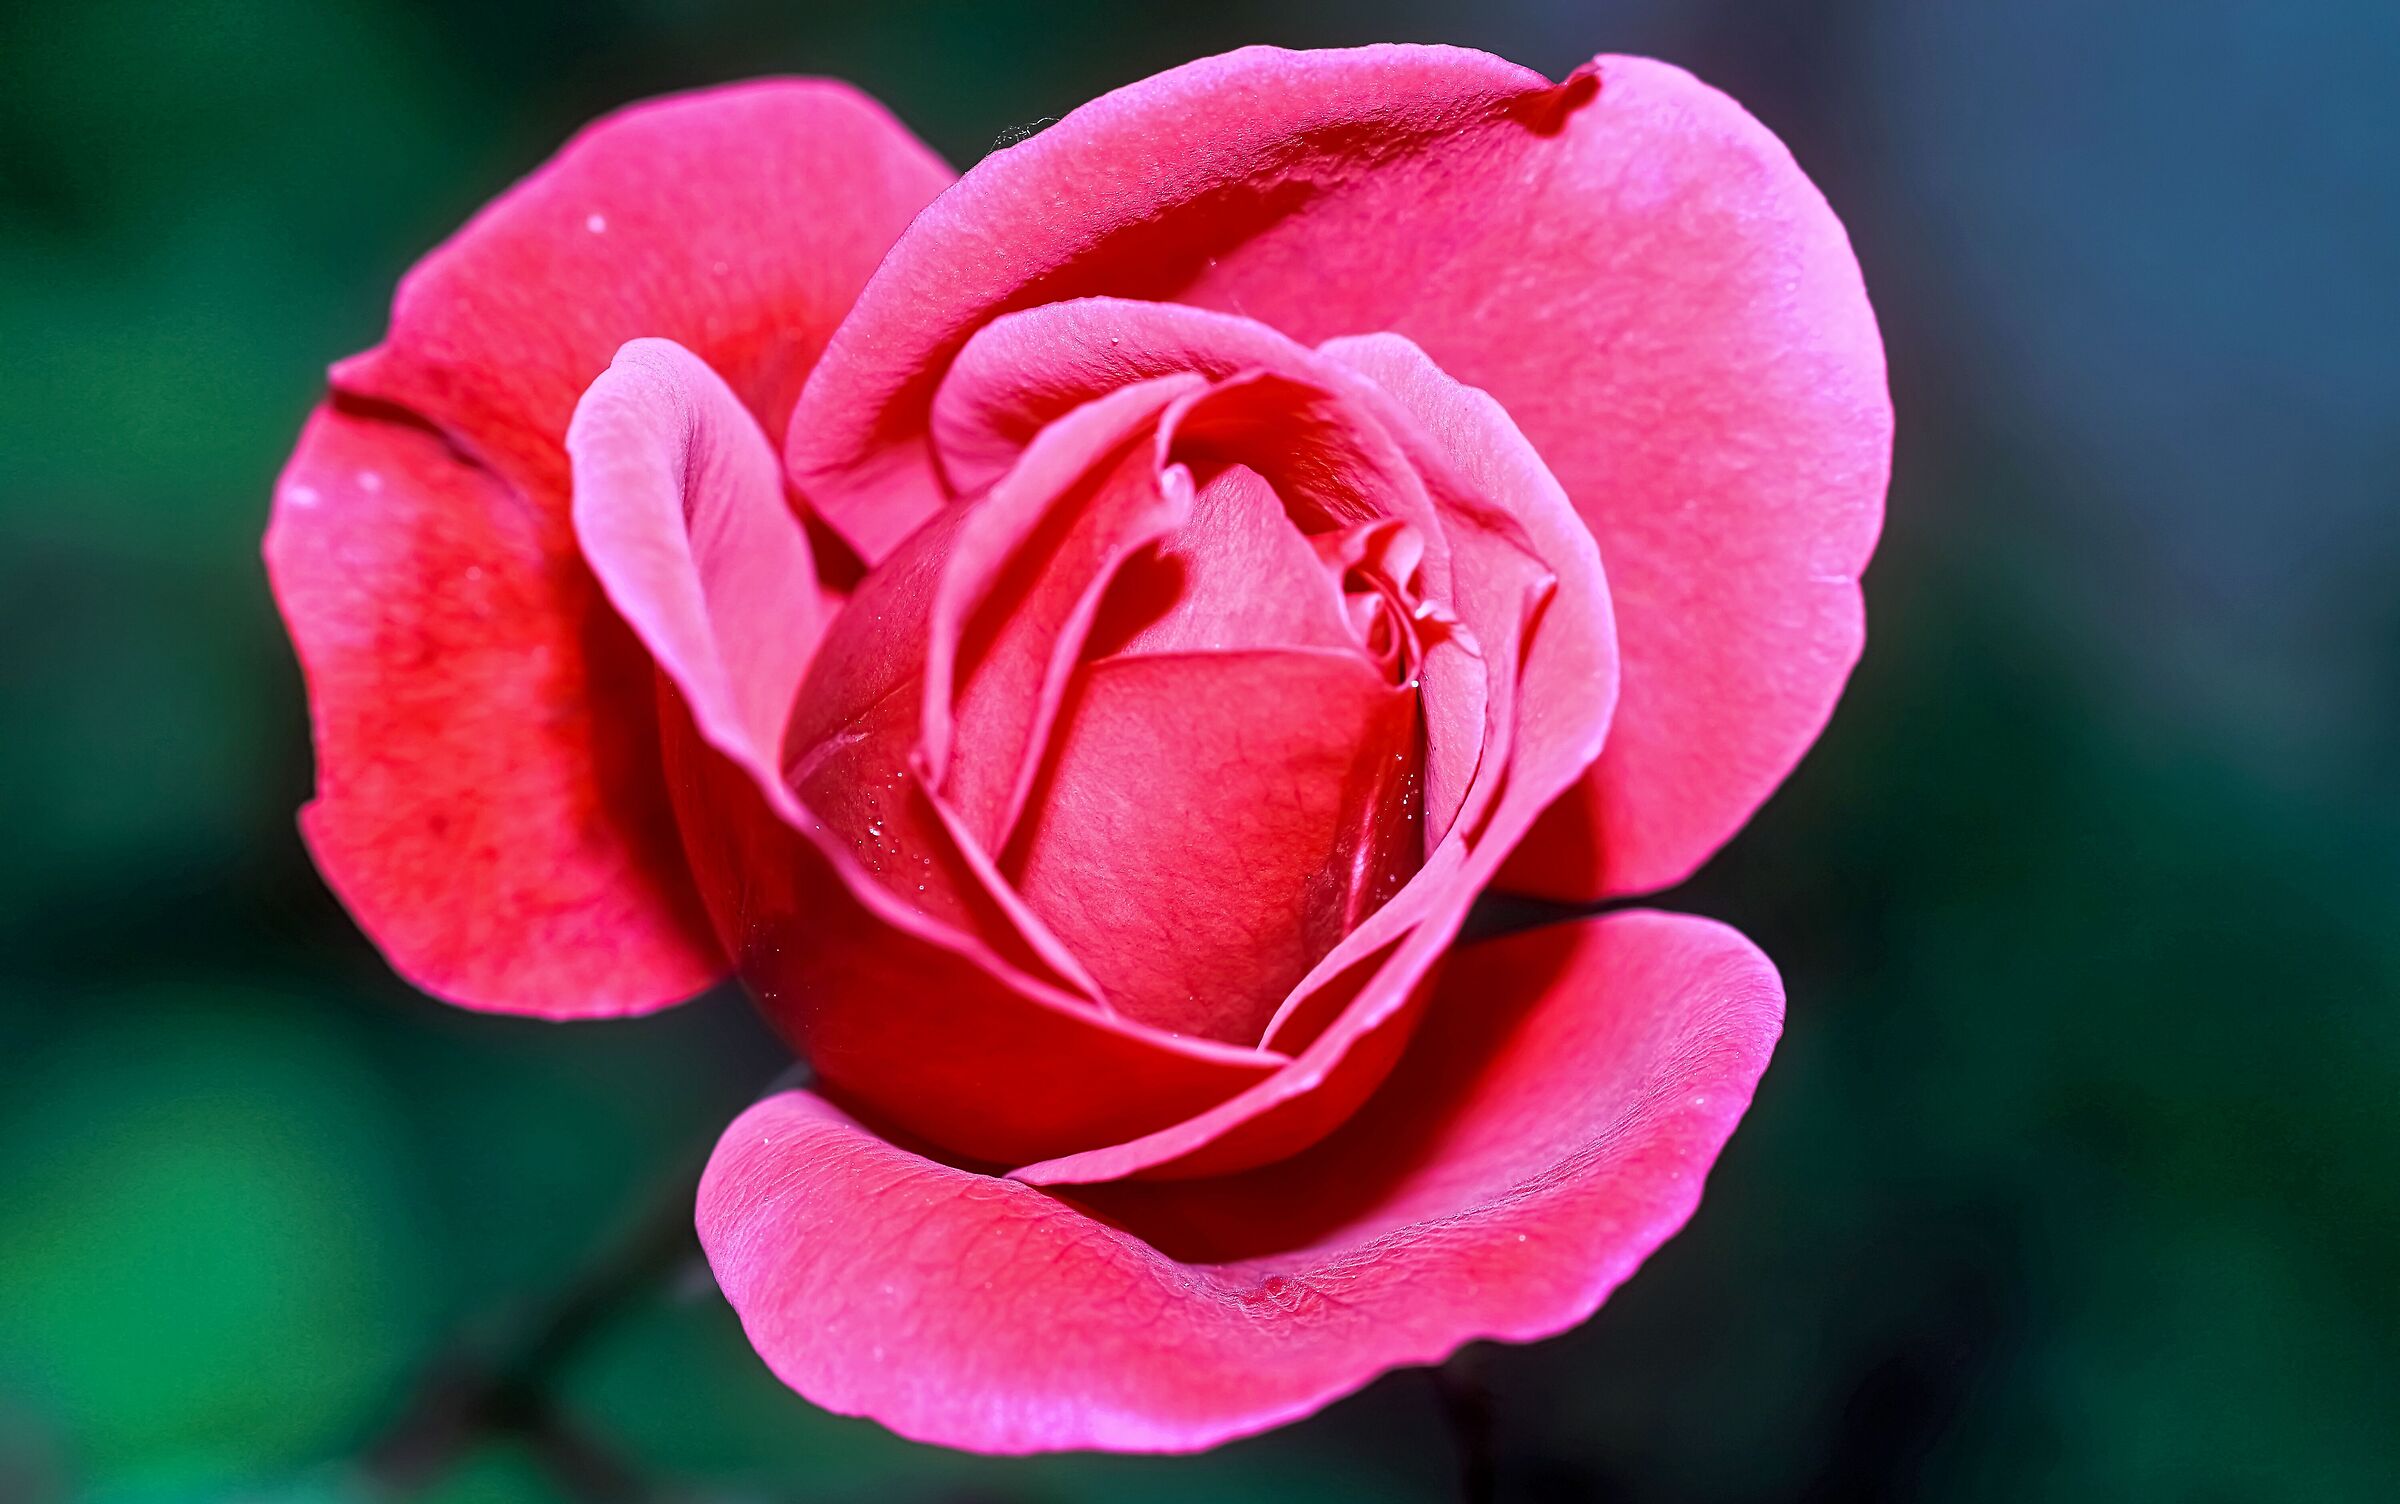 Rose in my garden 3/11/2020...